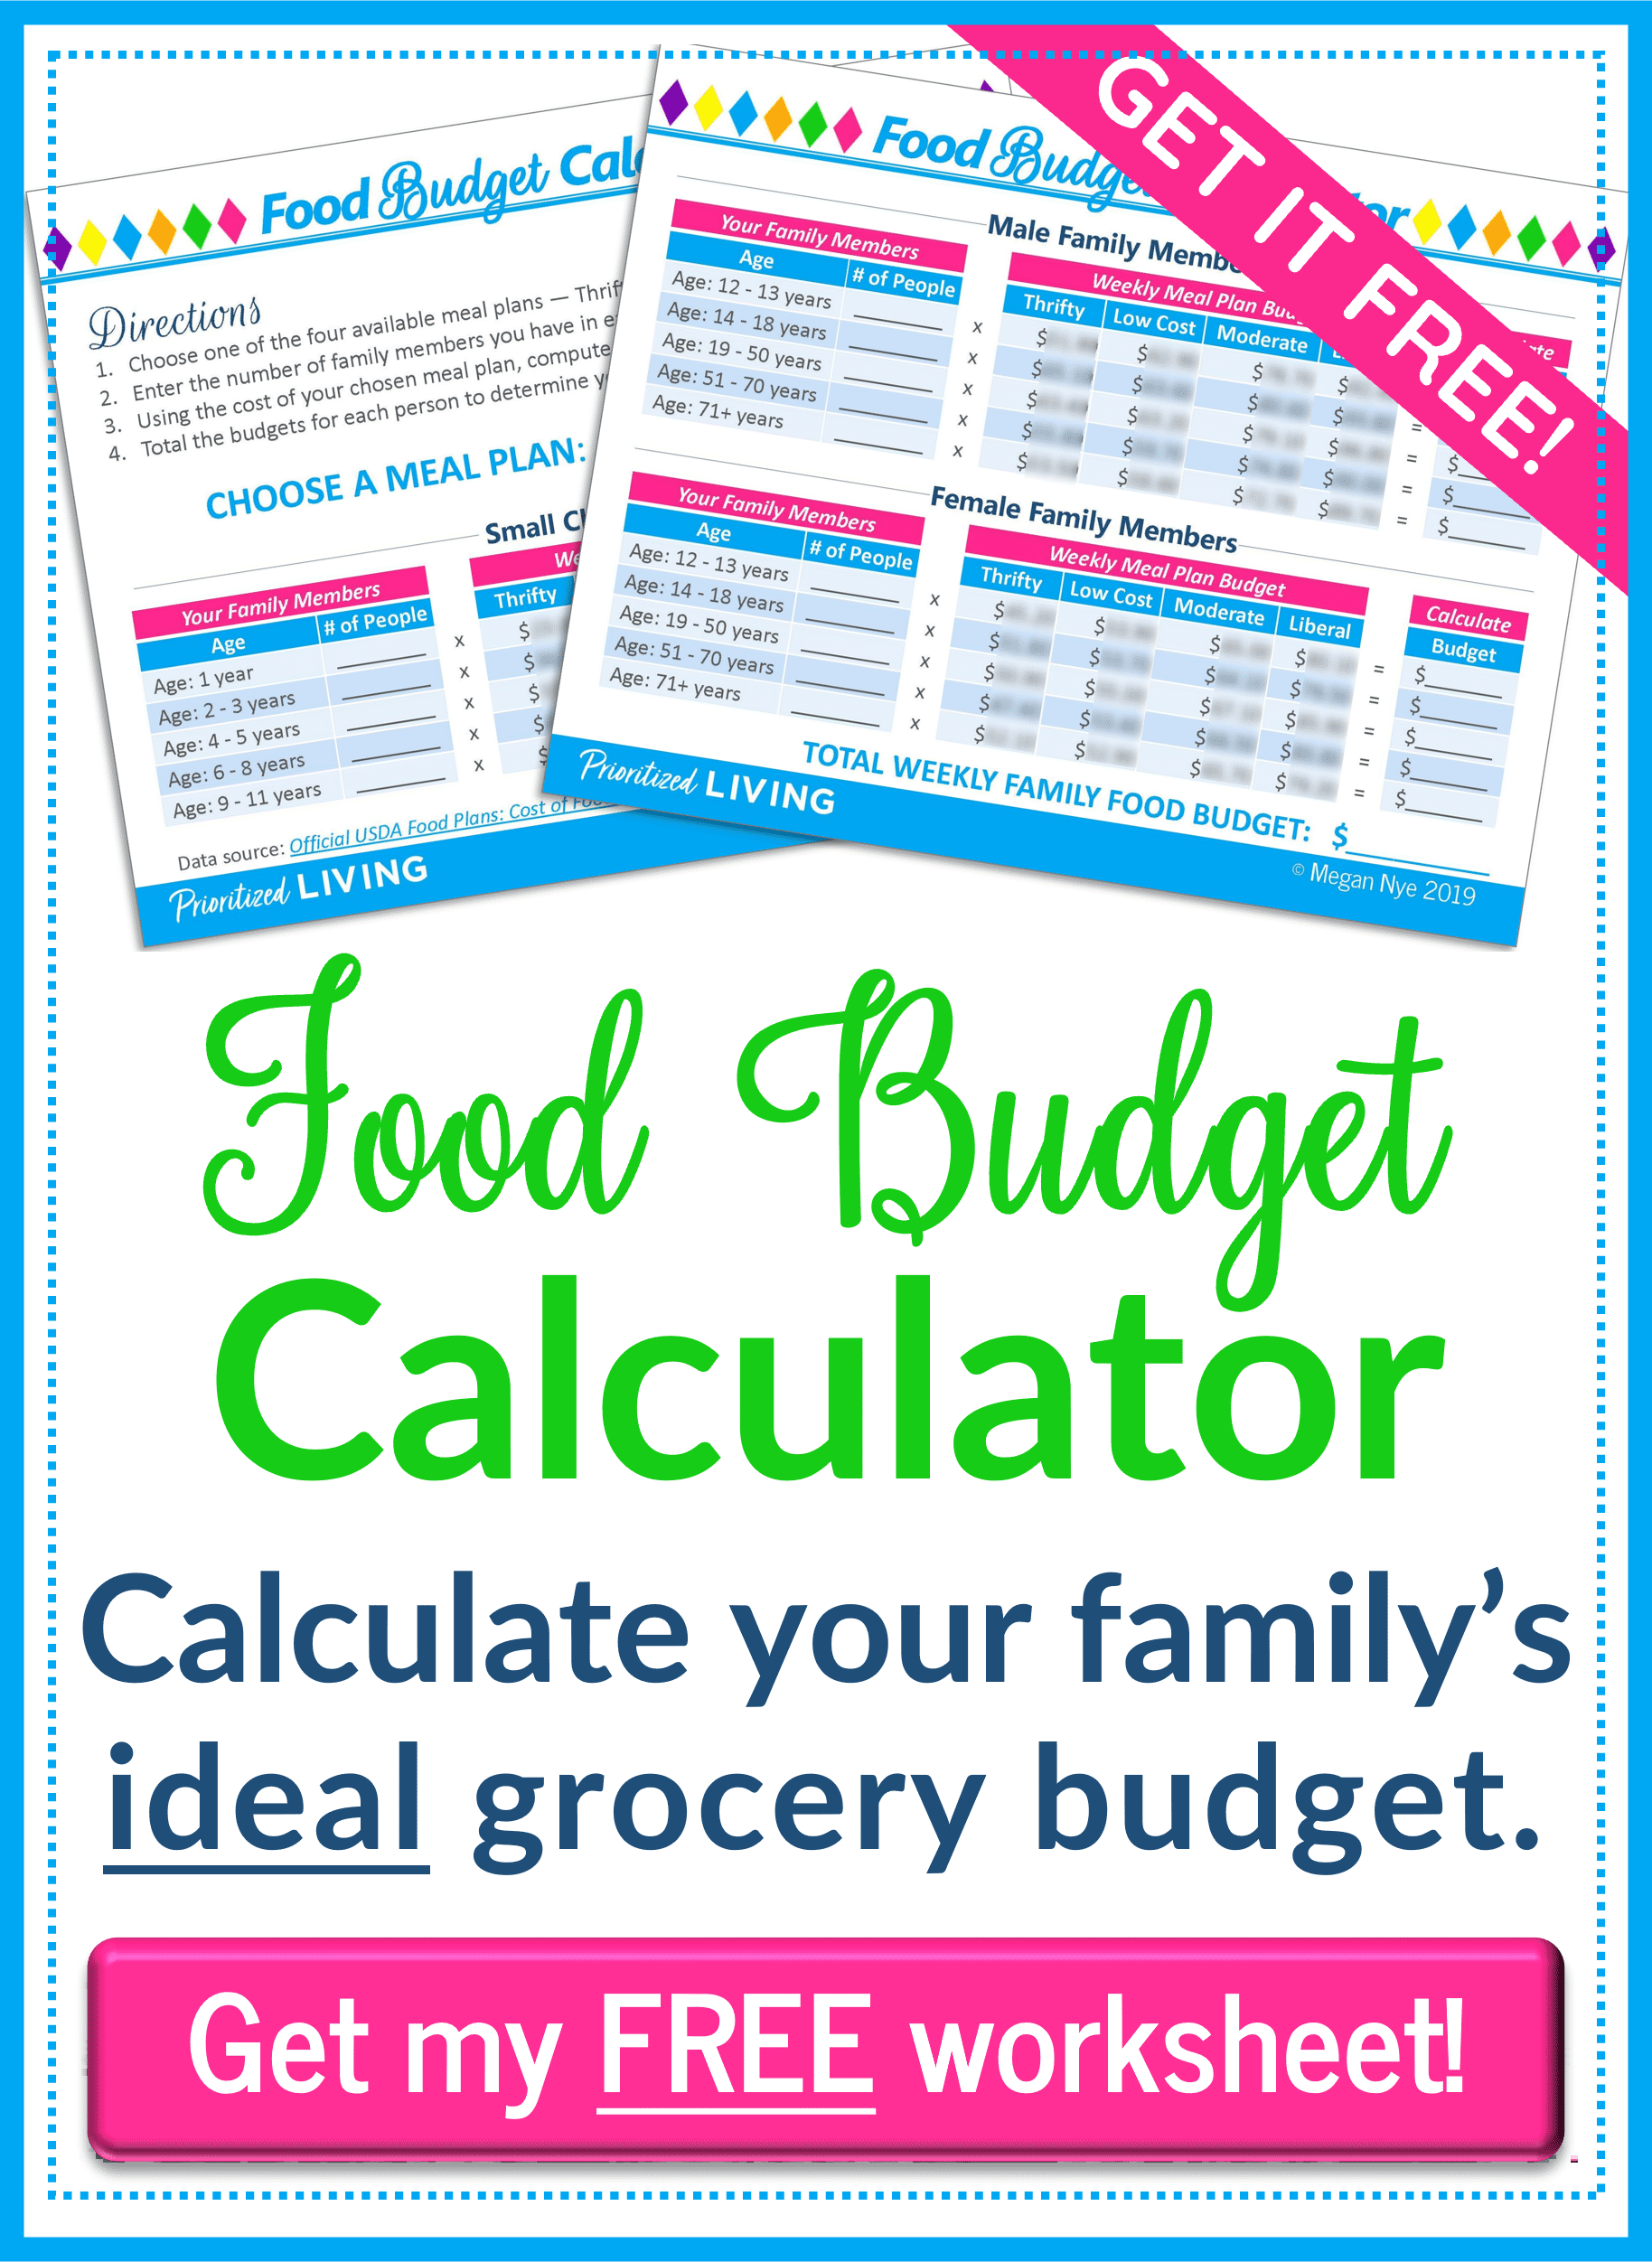 FREE Food Budget Calculator